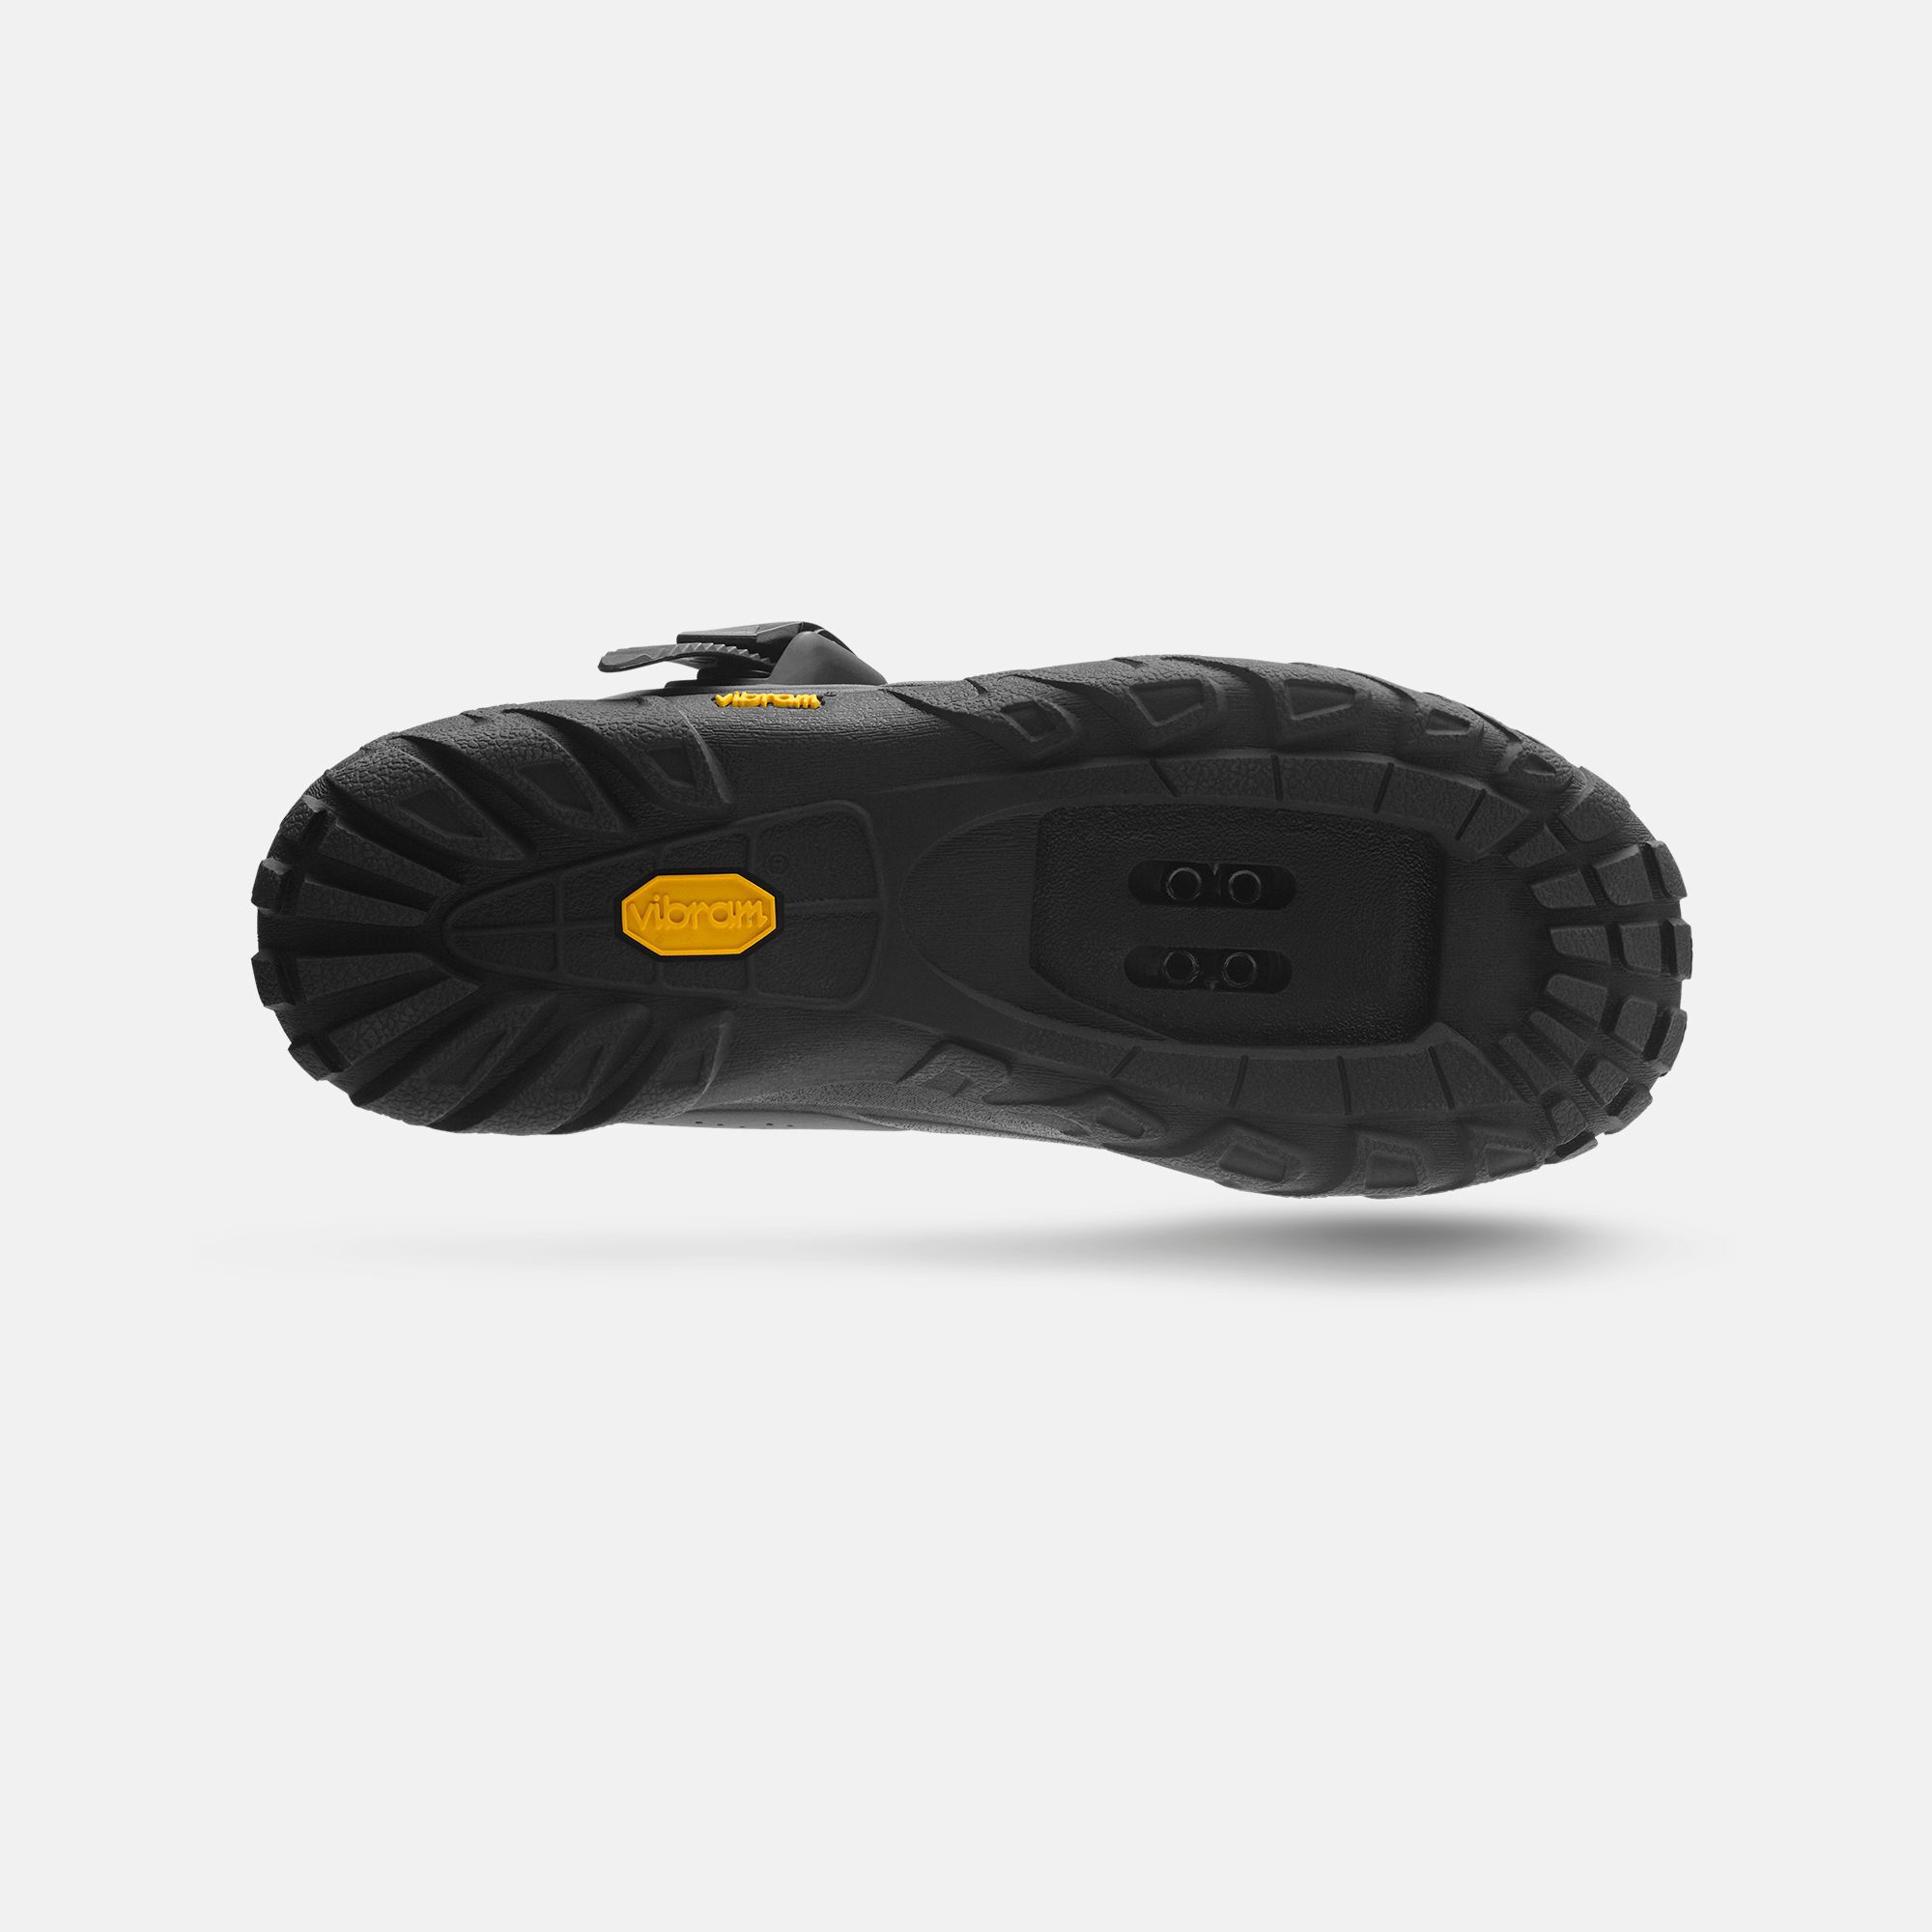 Terradura Shoe | Giro